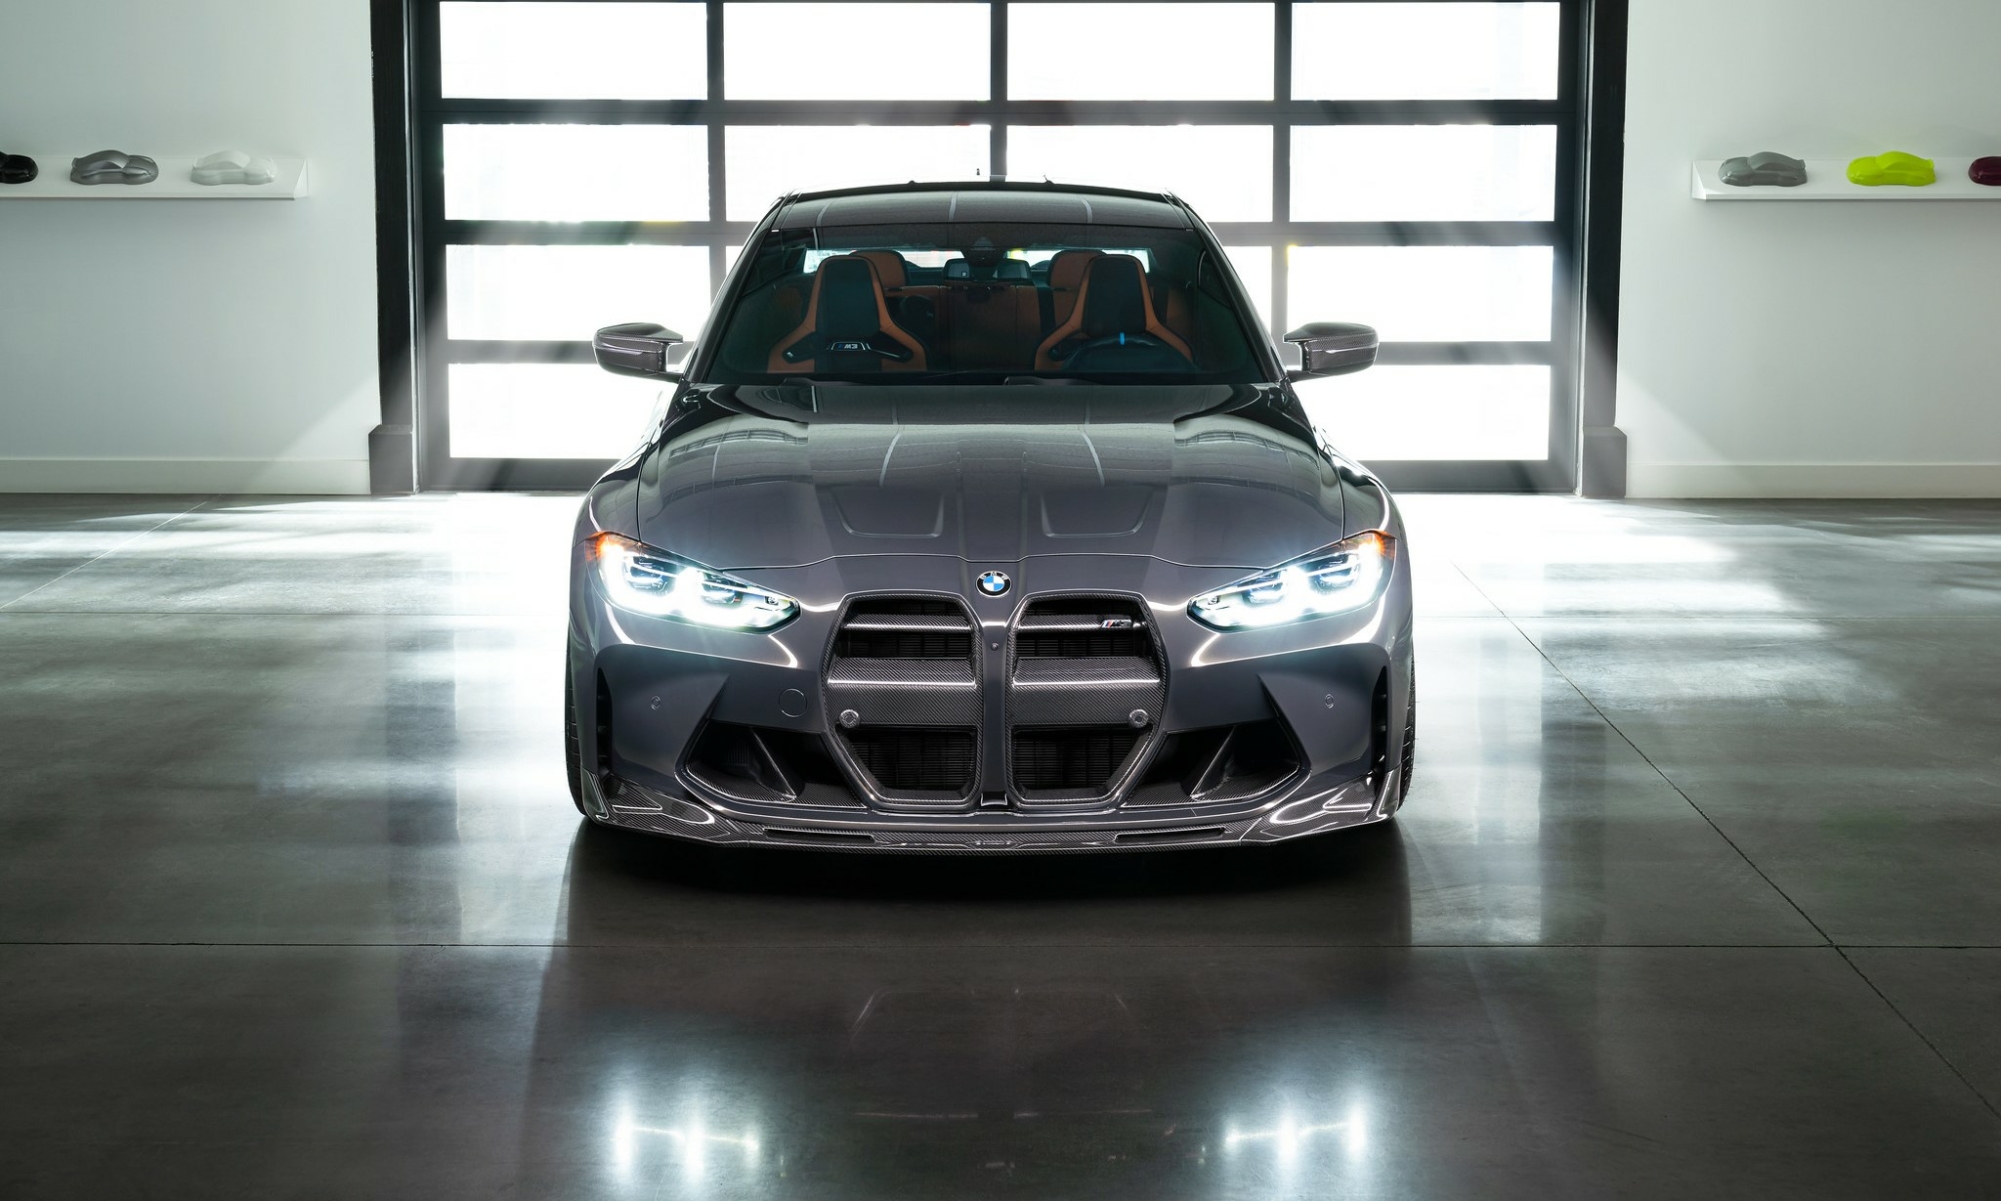 Vorsteiner has made carbon fibre accessories for the G80 BMW M3.